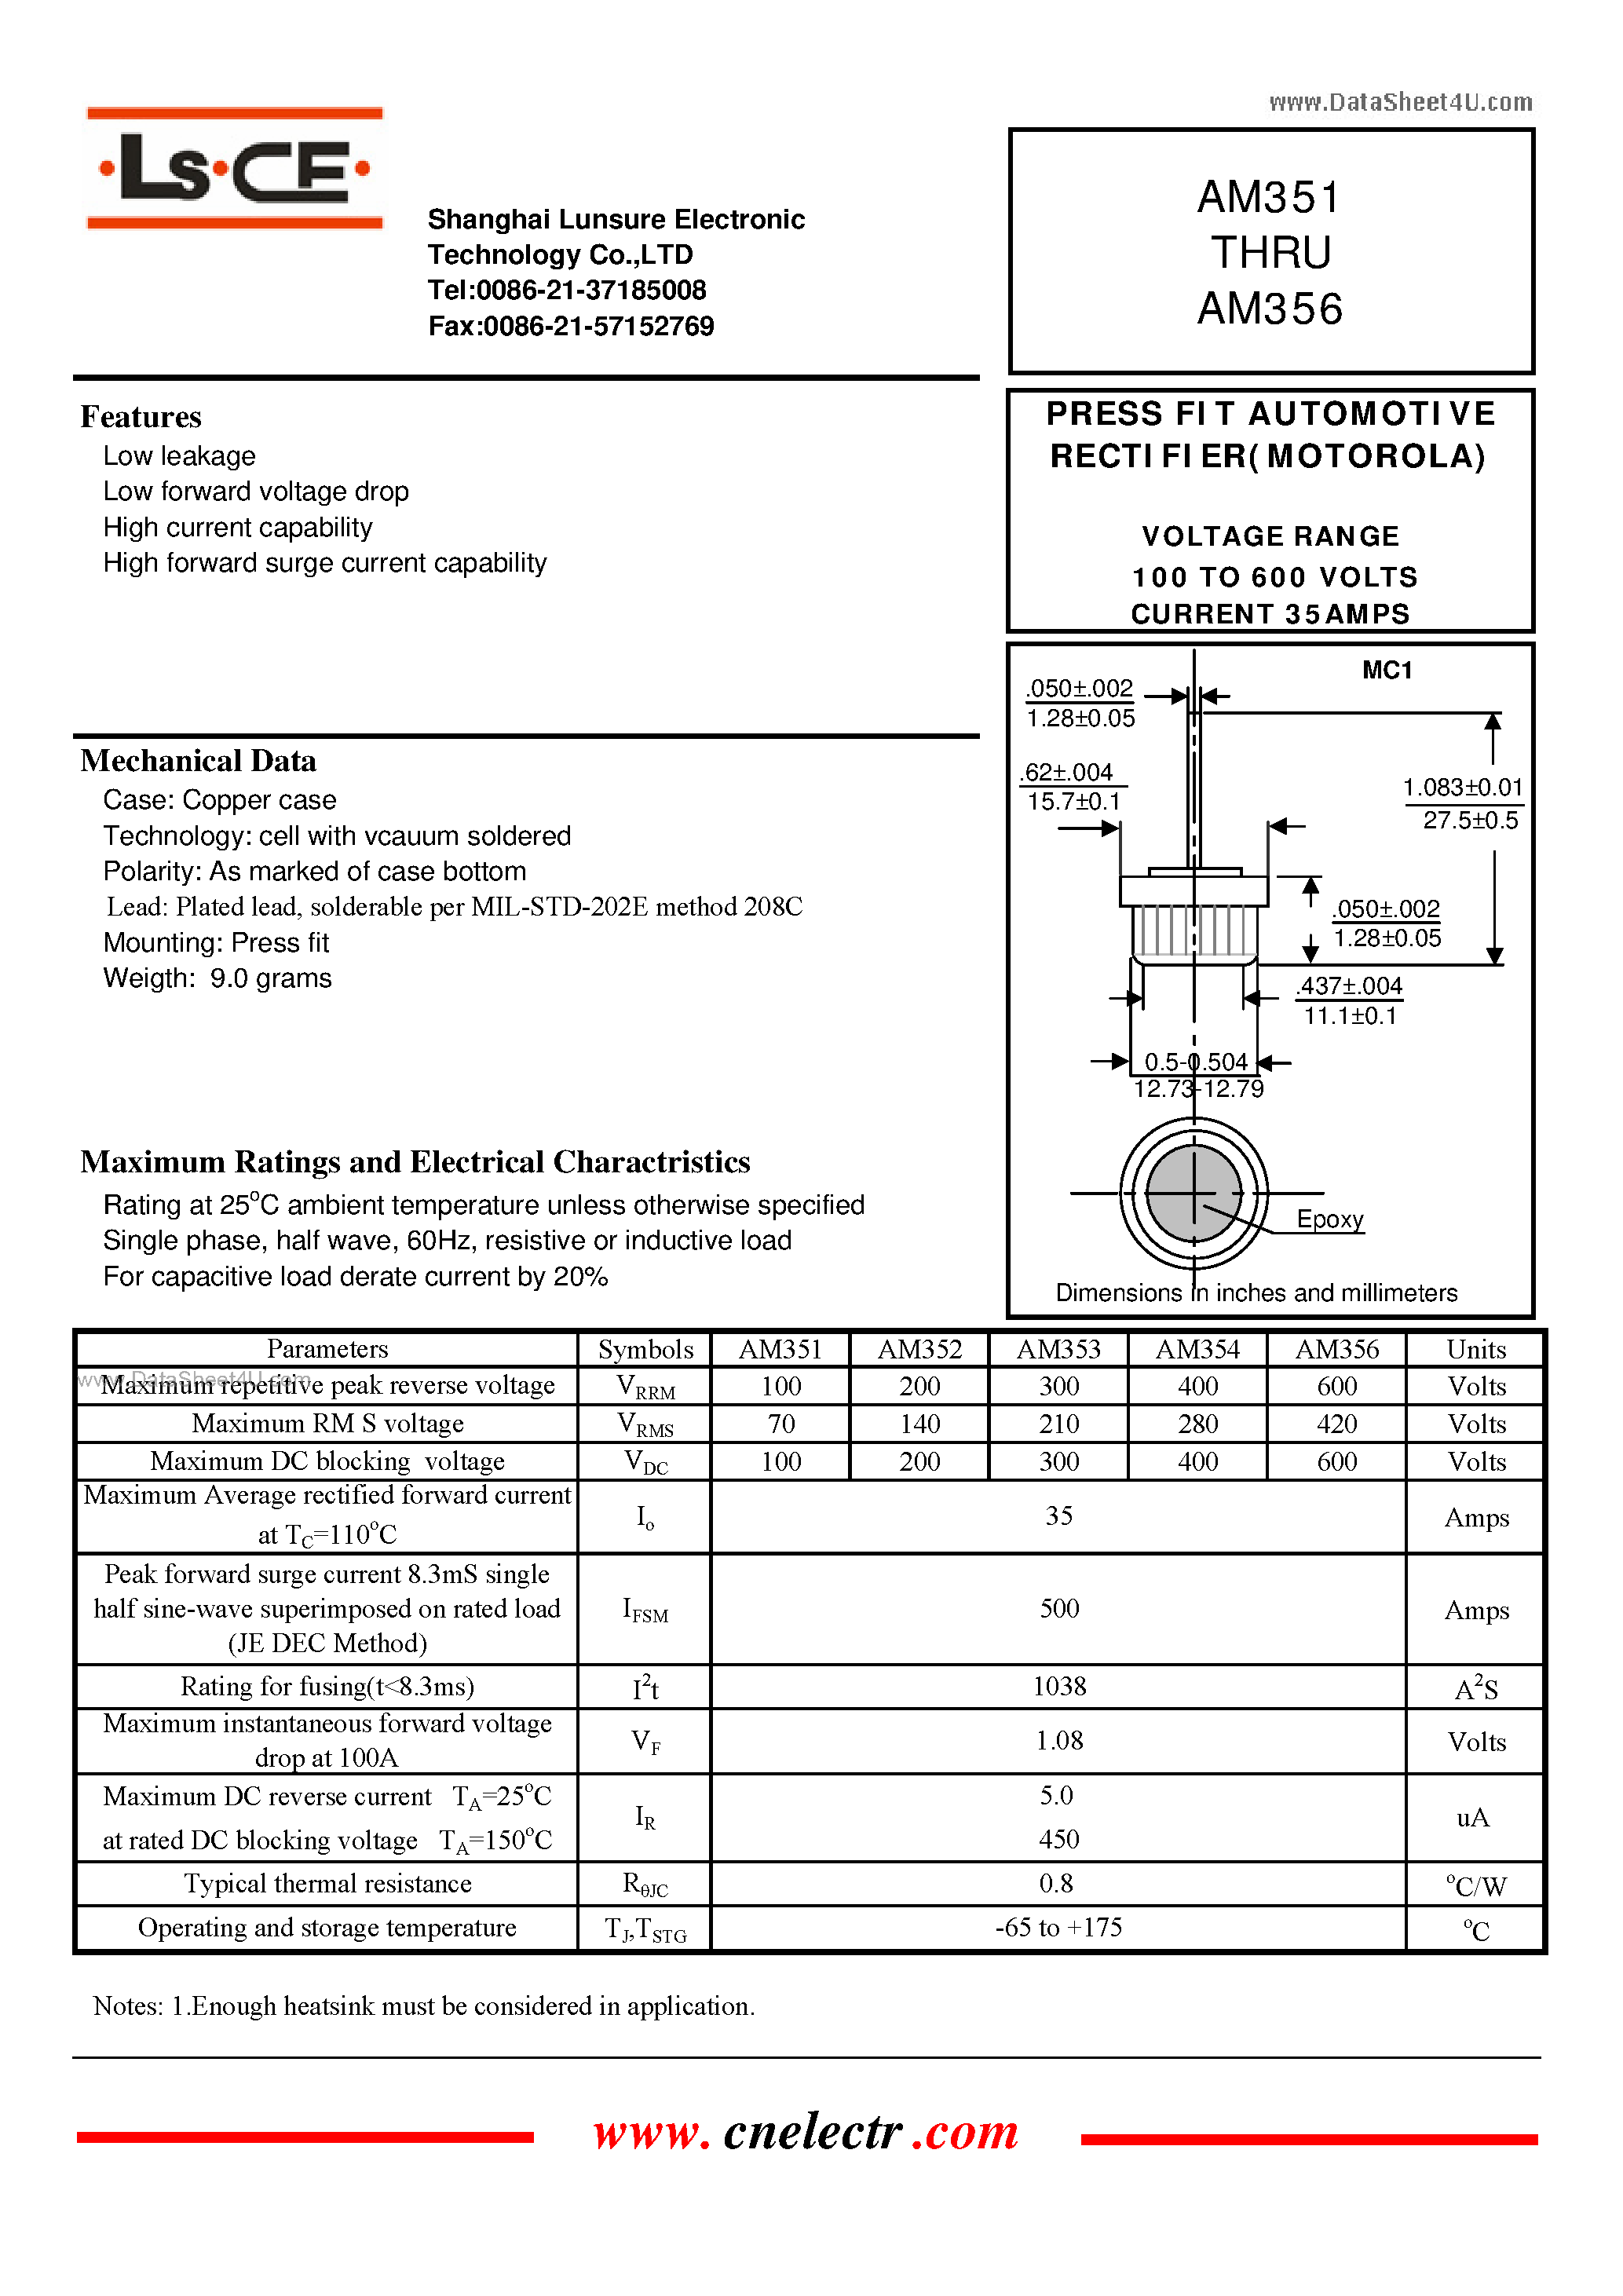 Datasheet AM351 - (AM351 - AM356) PRESS FIT AUTOMOTIVE RECTIFIER page 1